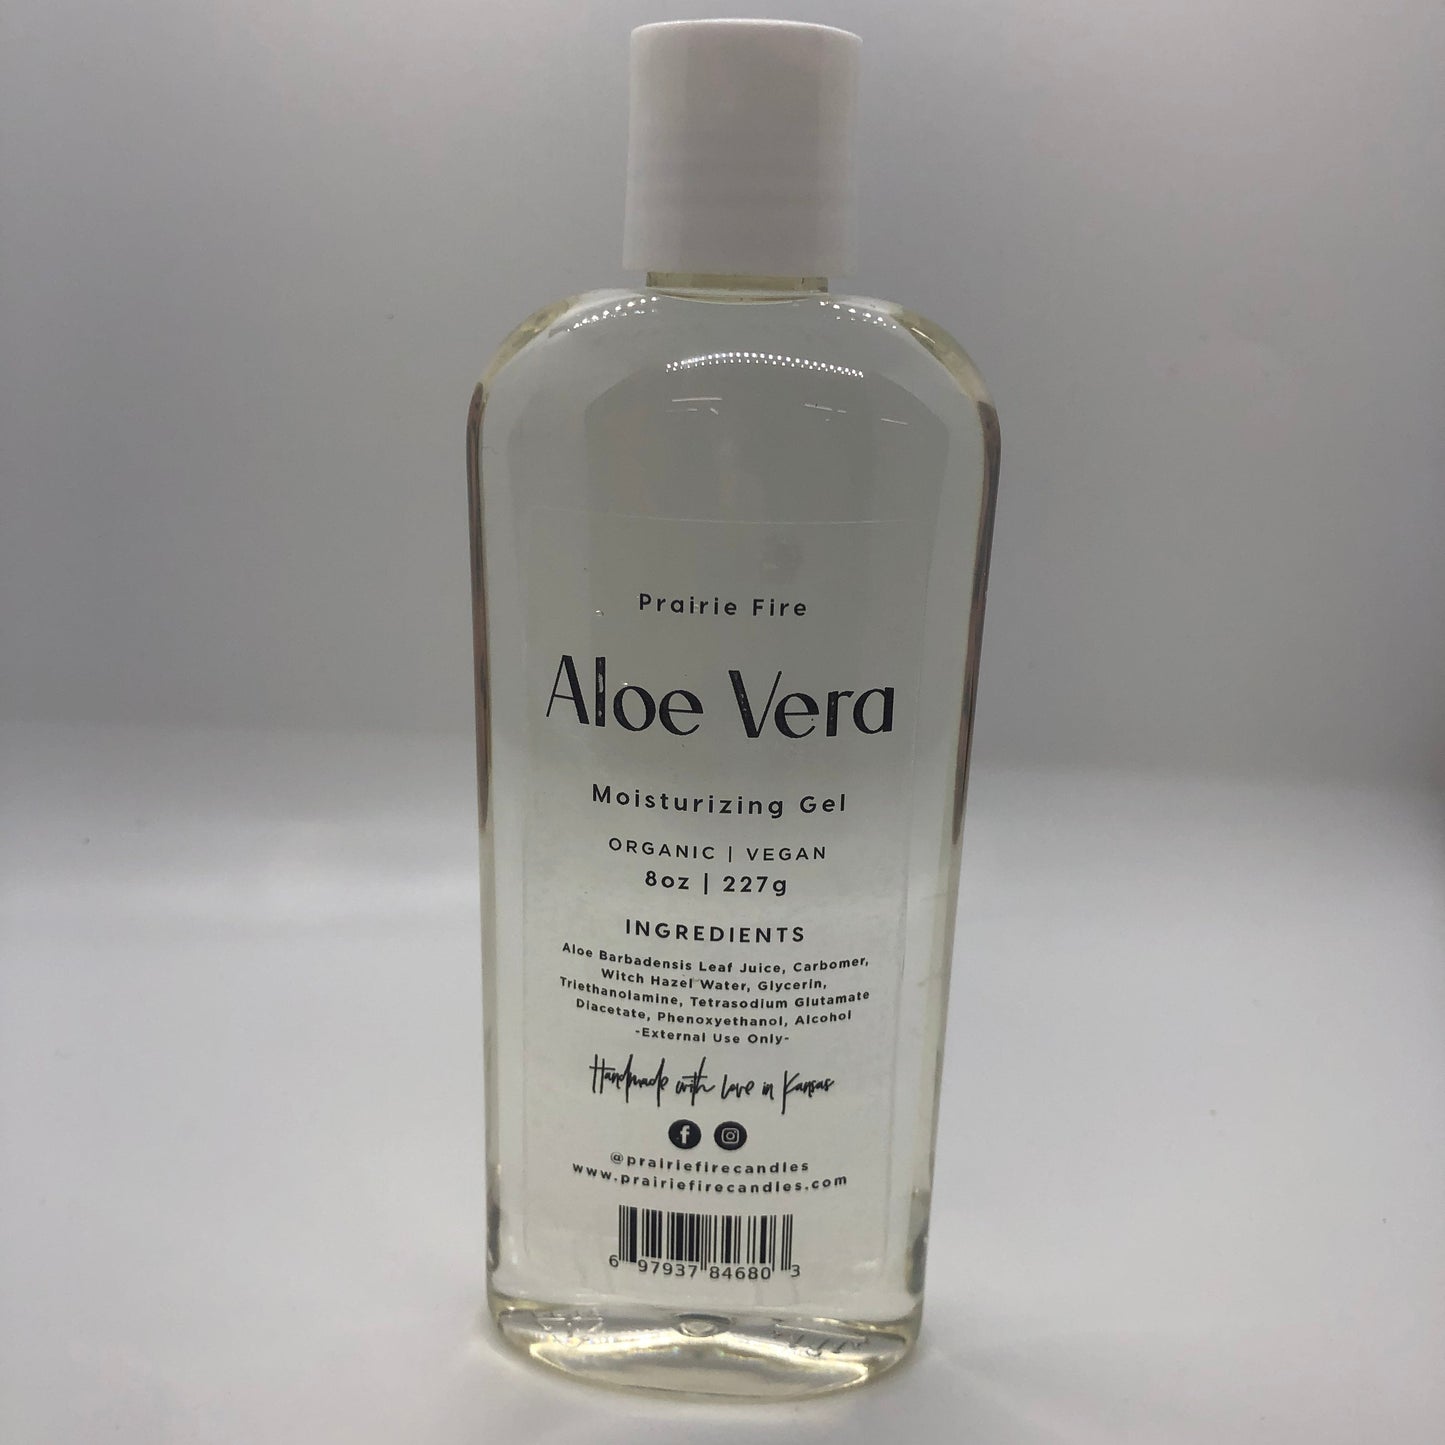 aloe vera moisturizing gel - 8 oz by prairie fire tallow, candles, and lavender